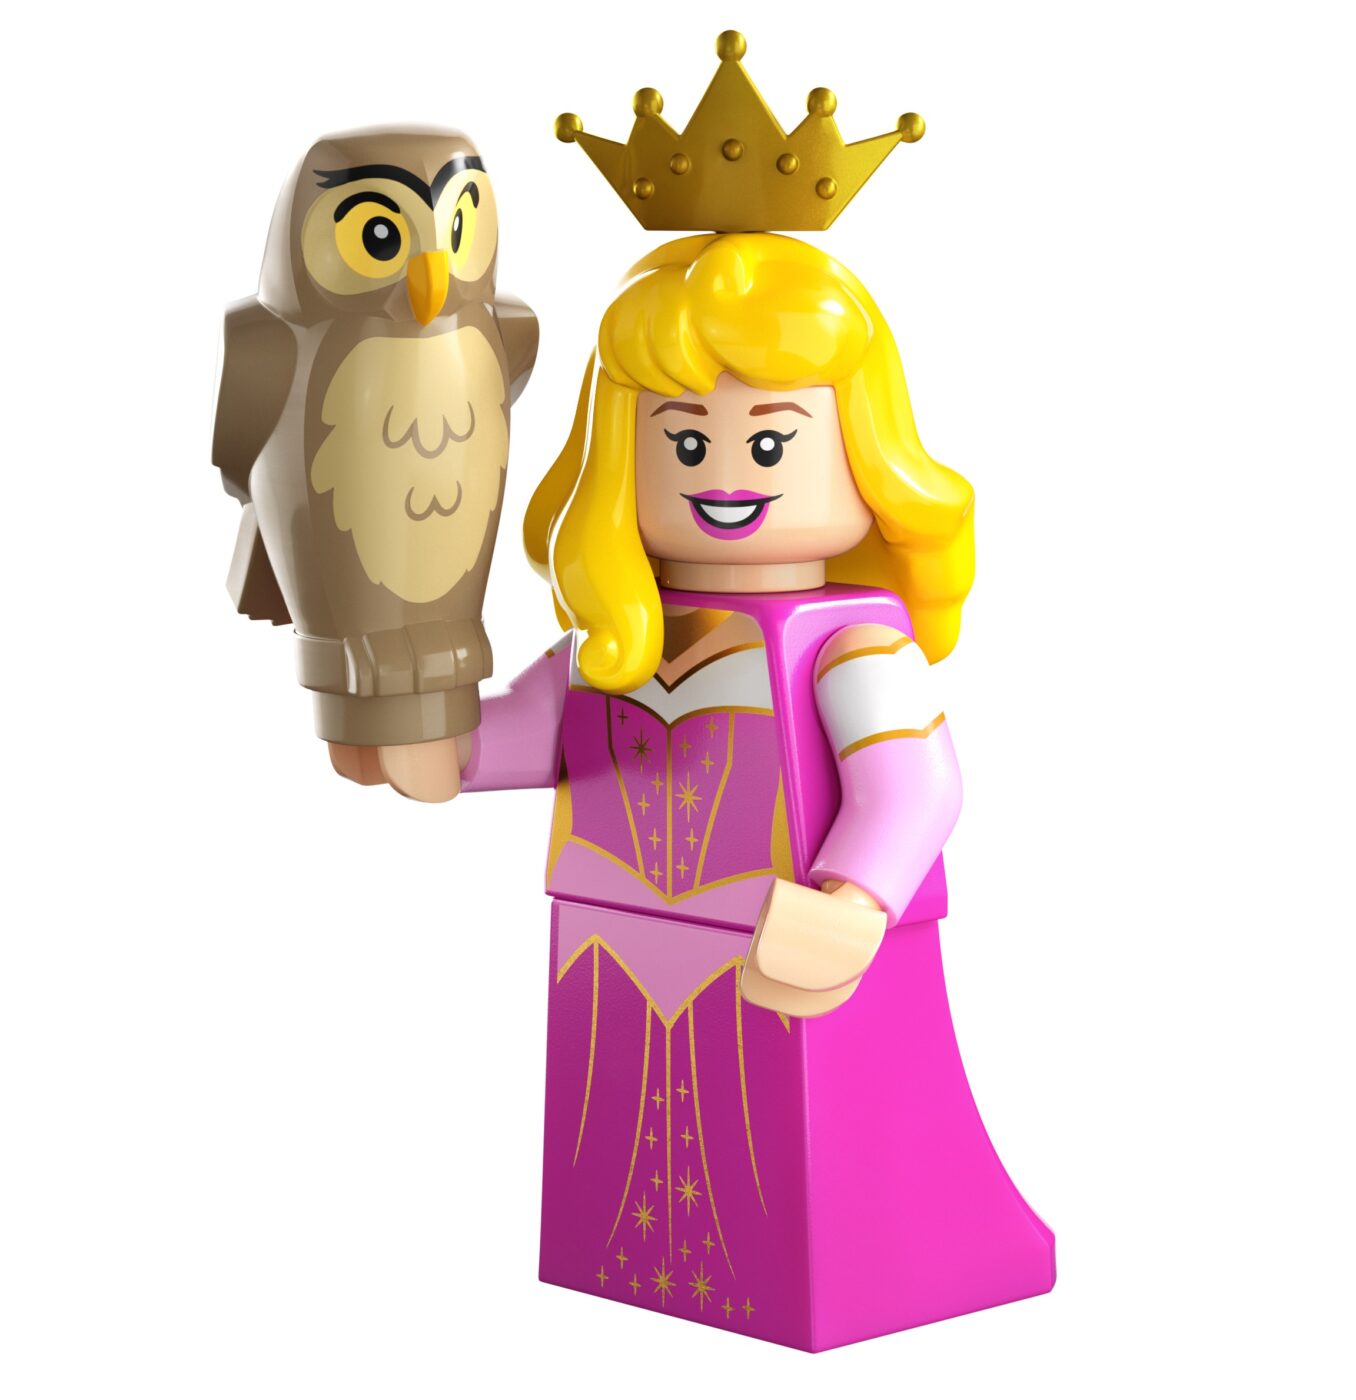 Lego Disney 100 71038 Limited Edition Collectible Minifigures, Aurora